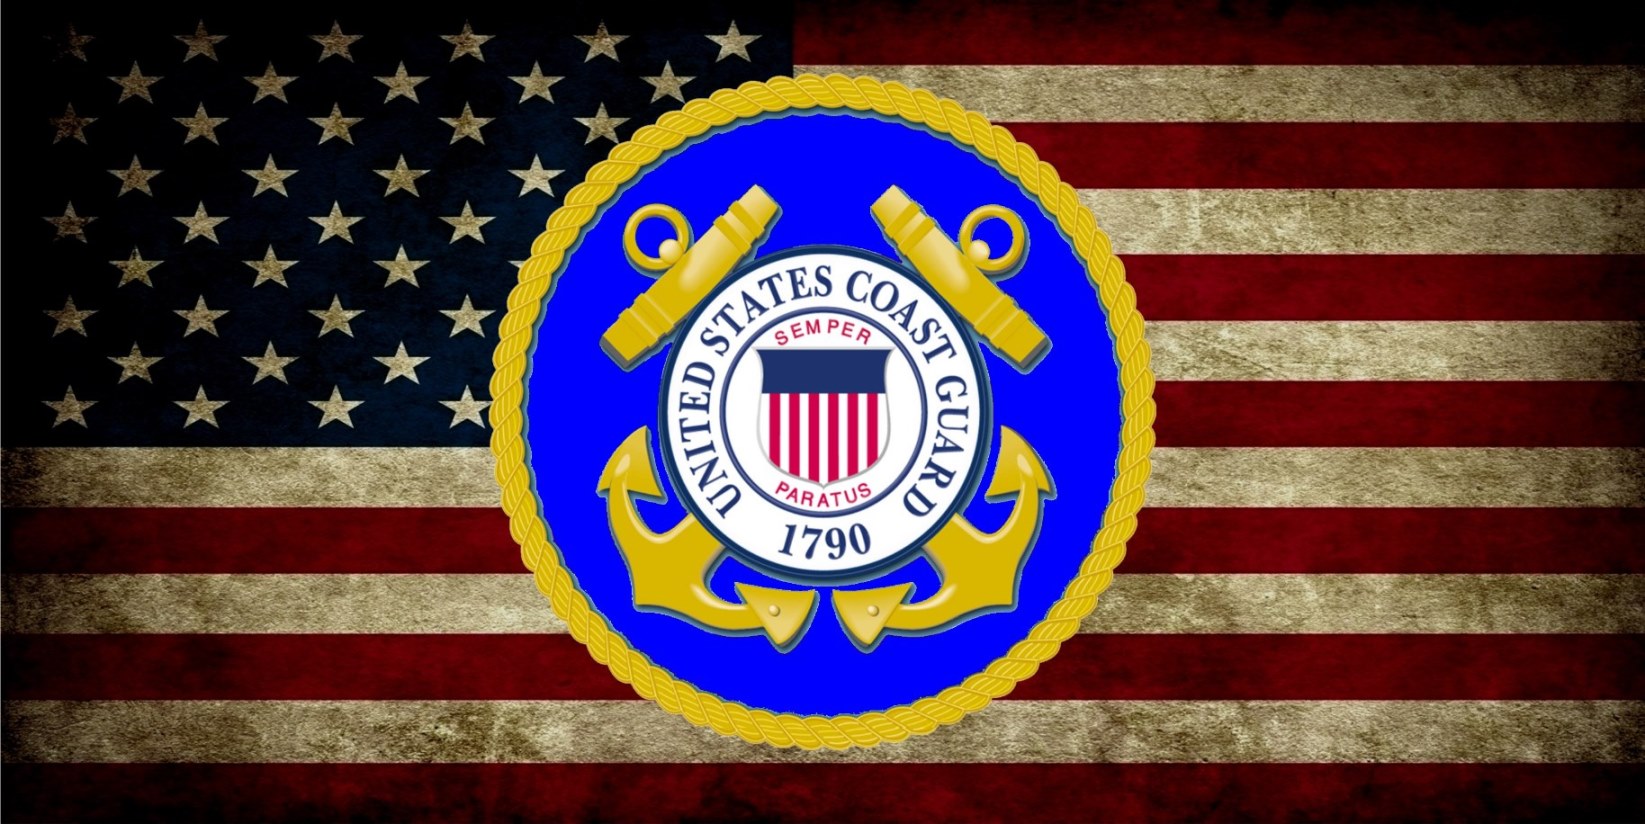 U.S. FLAG Worn With Coast Guard Insignia Photo License Plate